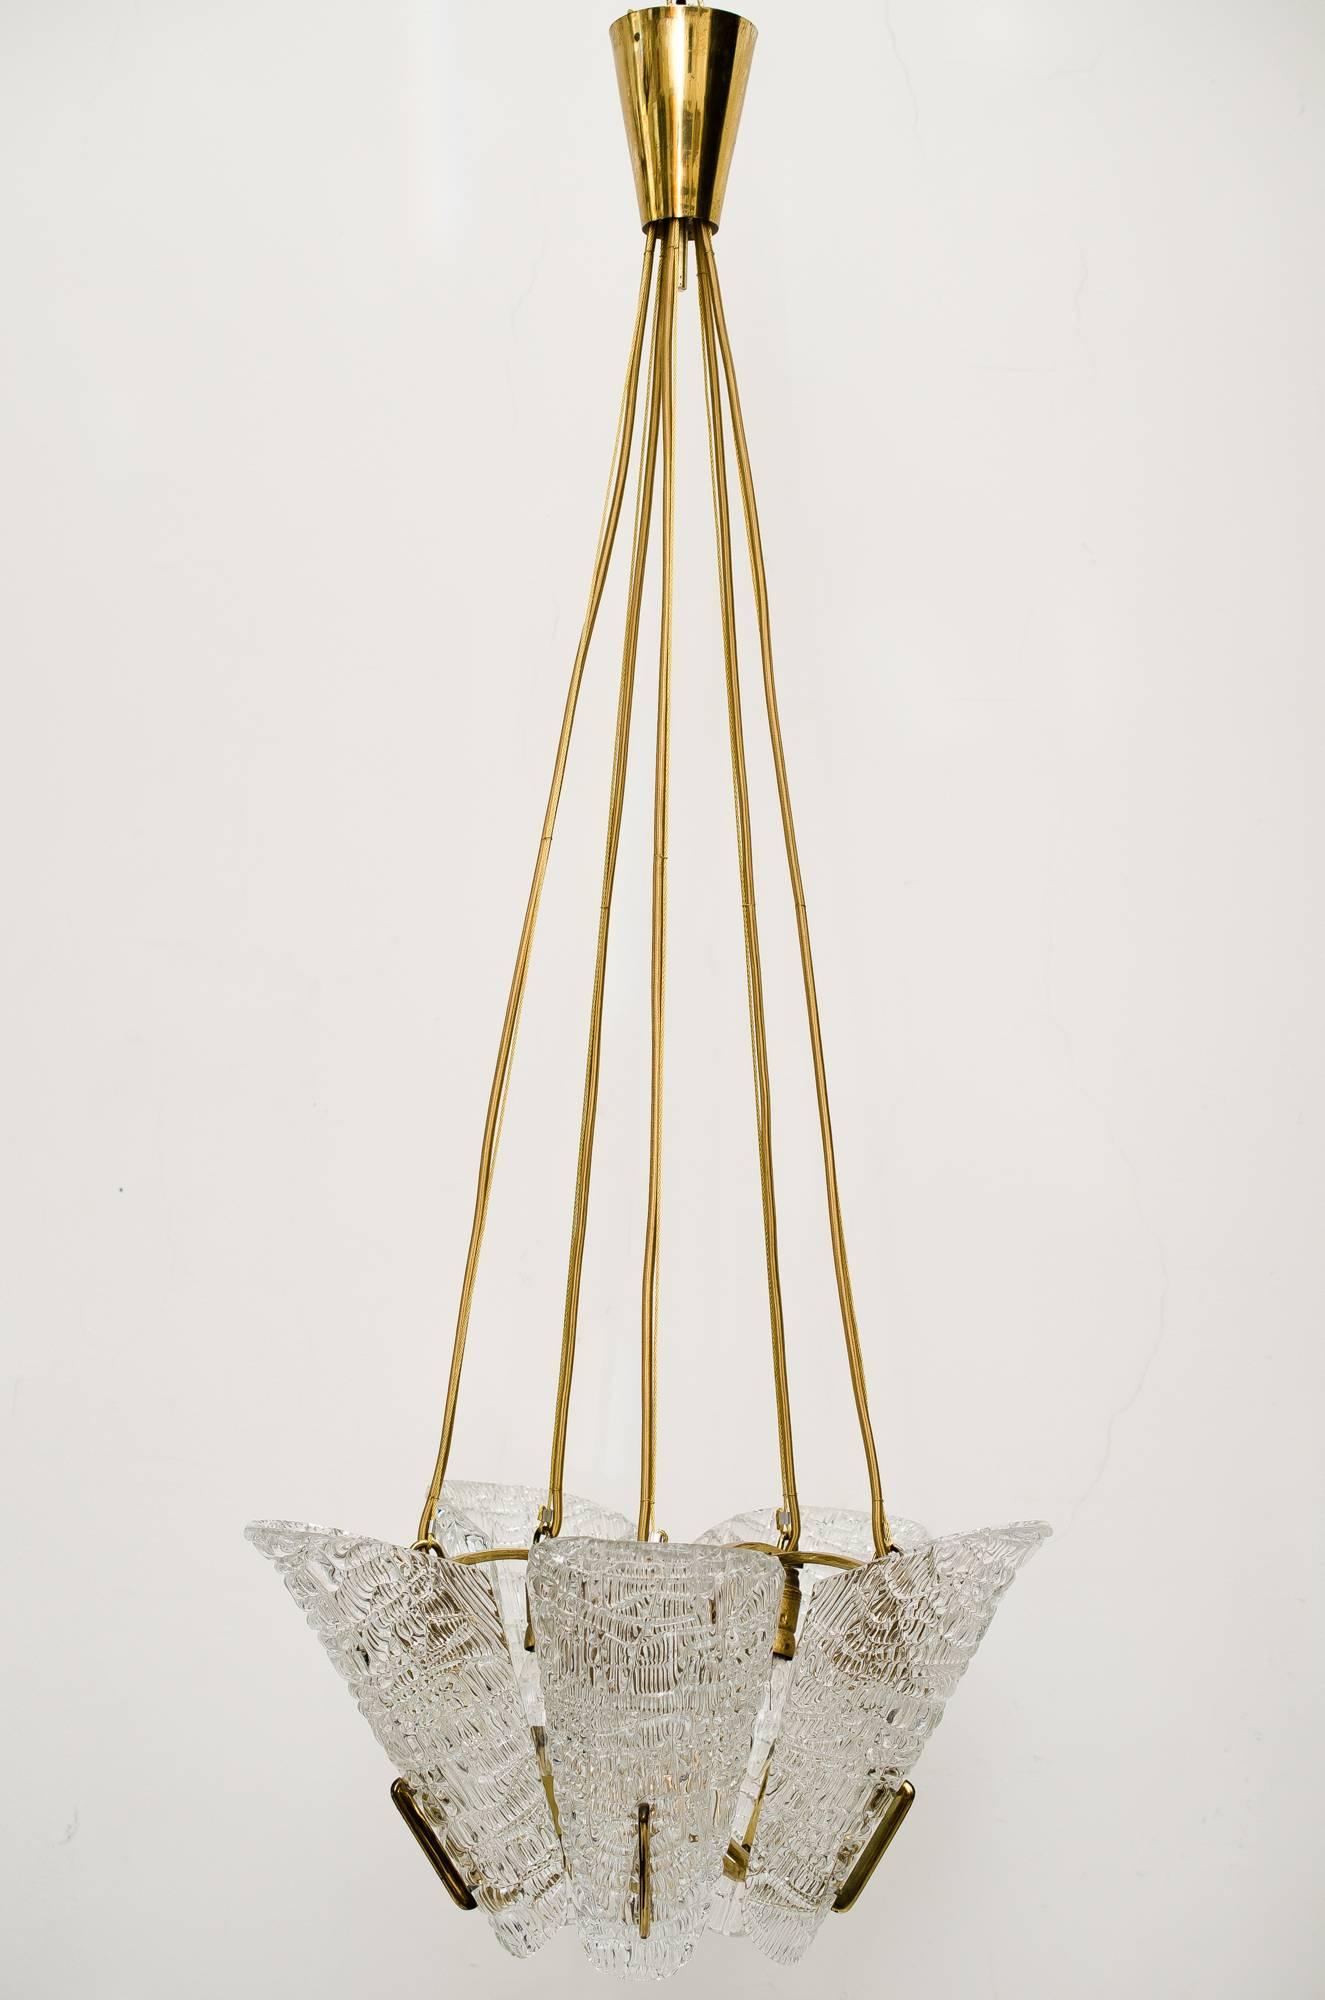 Beautiful Klamar chandelier with textured glass, circa 1950s
Original condition.